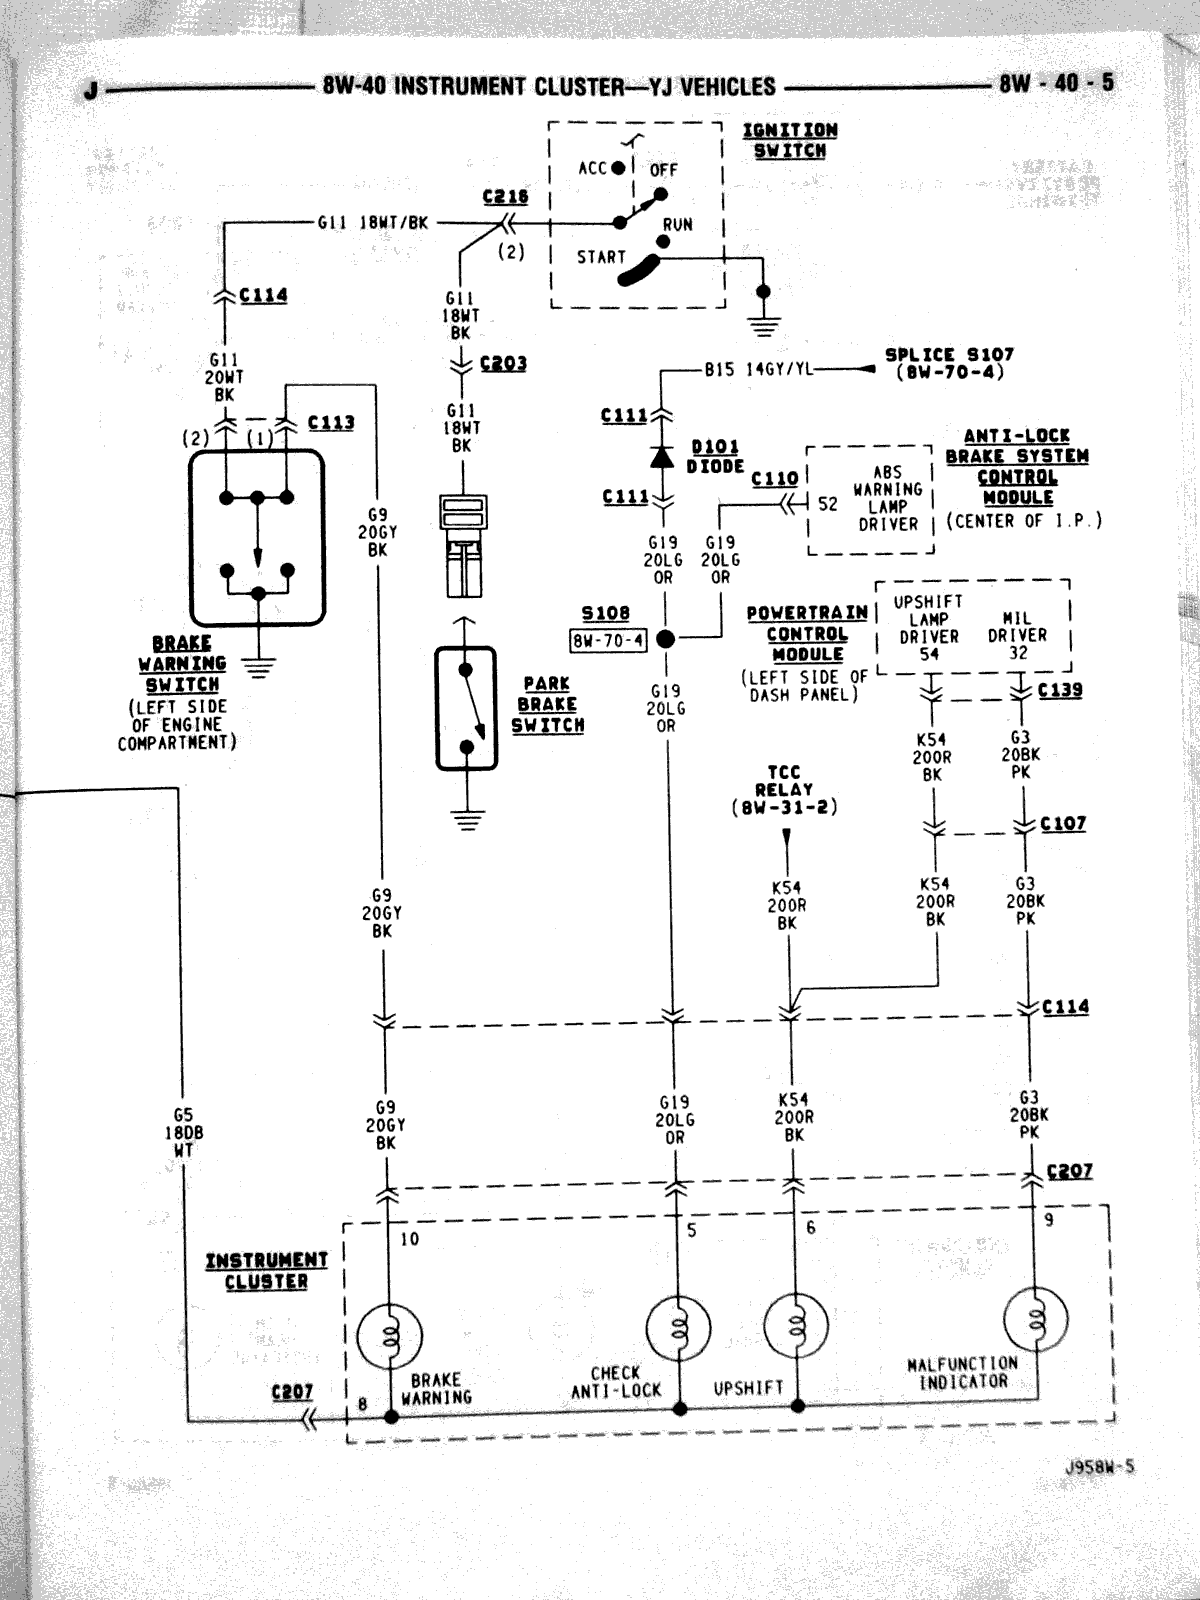 Jeep Wrangler Instrument Cluster Manual – Jedi.com  Wiring Diagram For 1995 Jeep Wrangler    Jedi.com